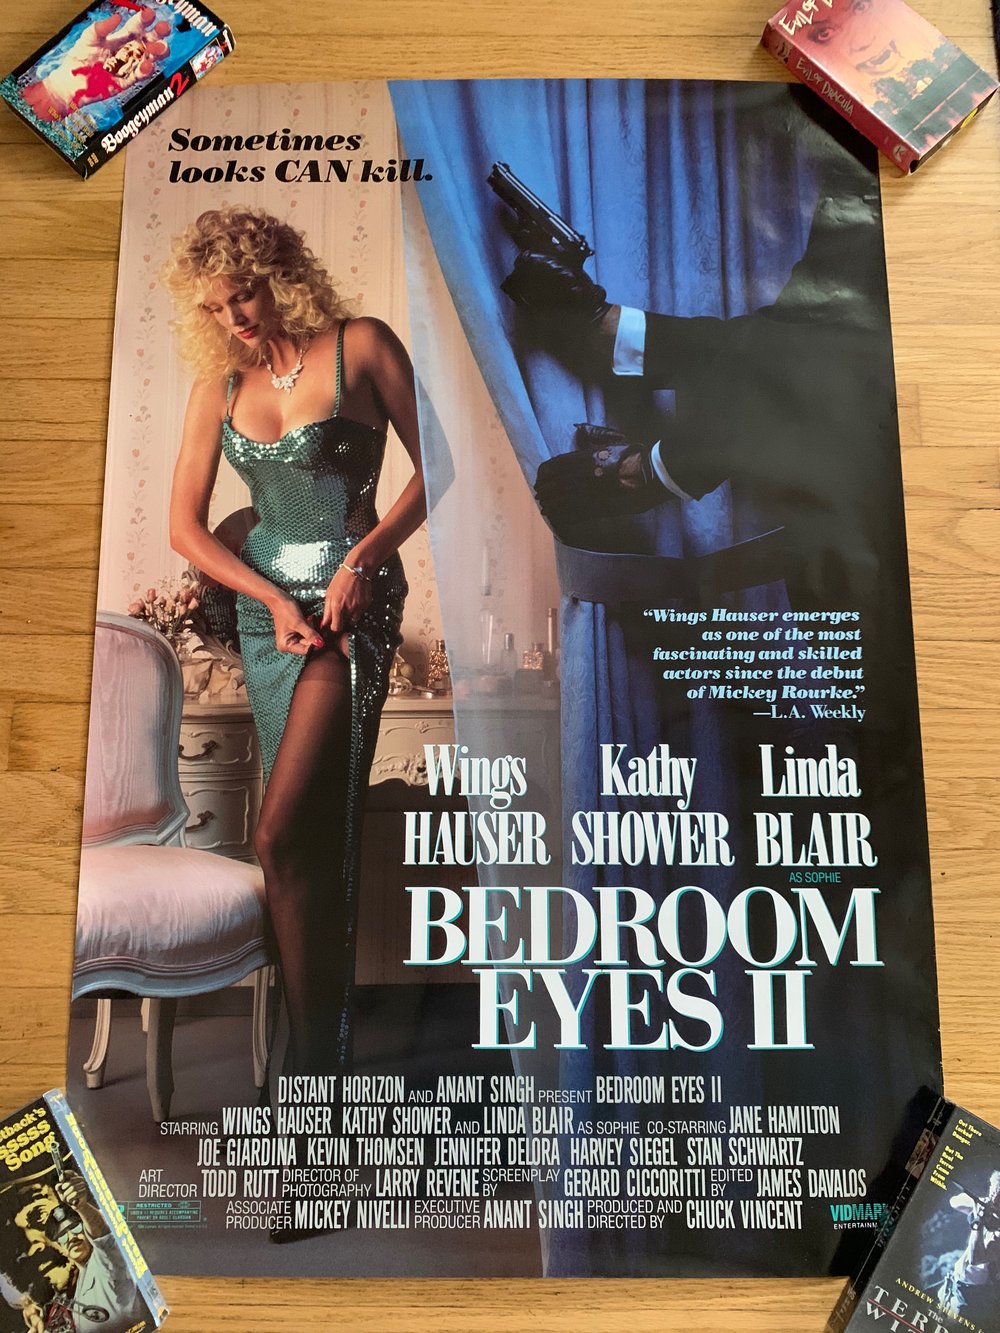 1991 BEDROOM EYES II Original Vidmark Entertainment Promotional Home Video Movie Poster